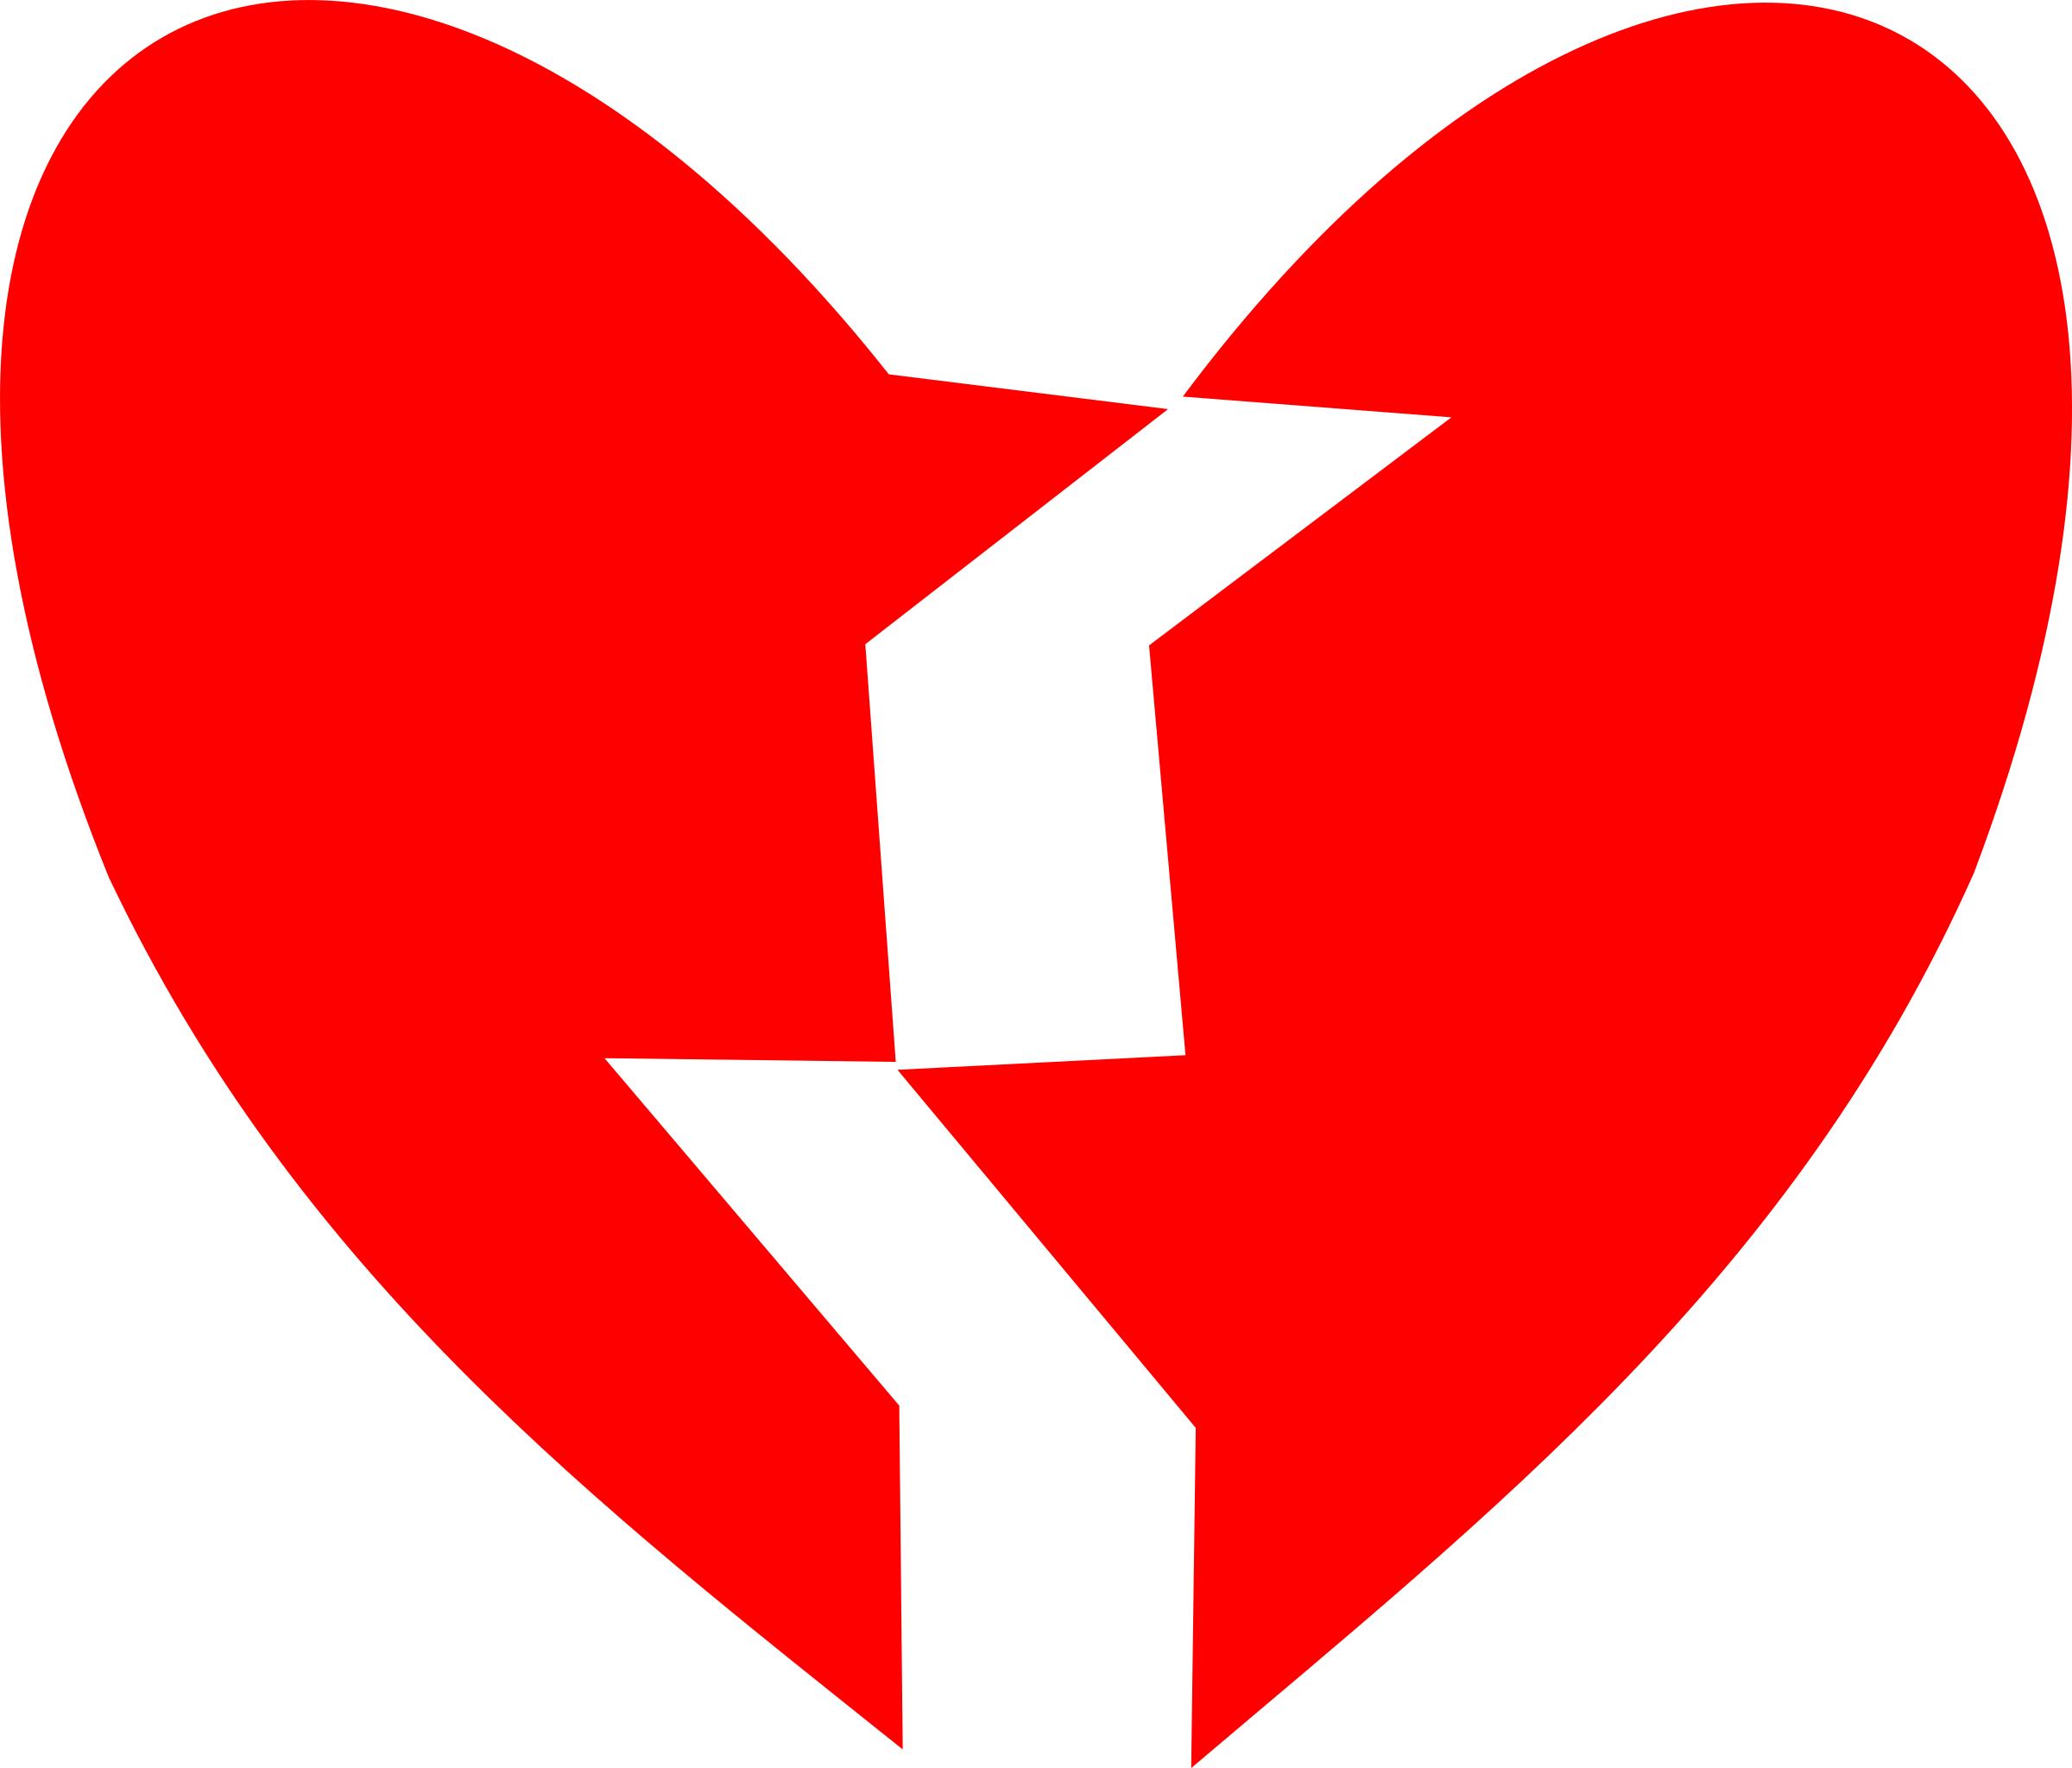 Heart broken red icons